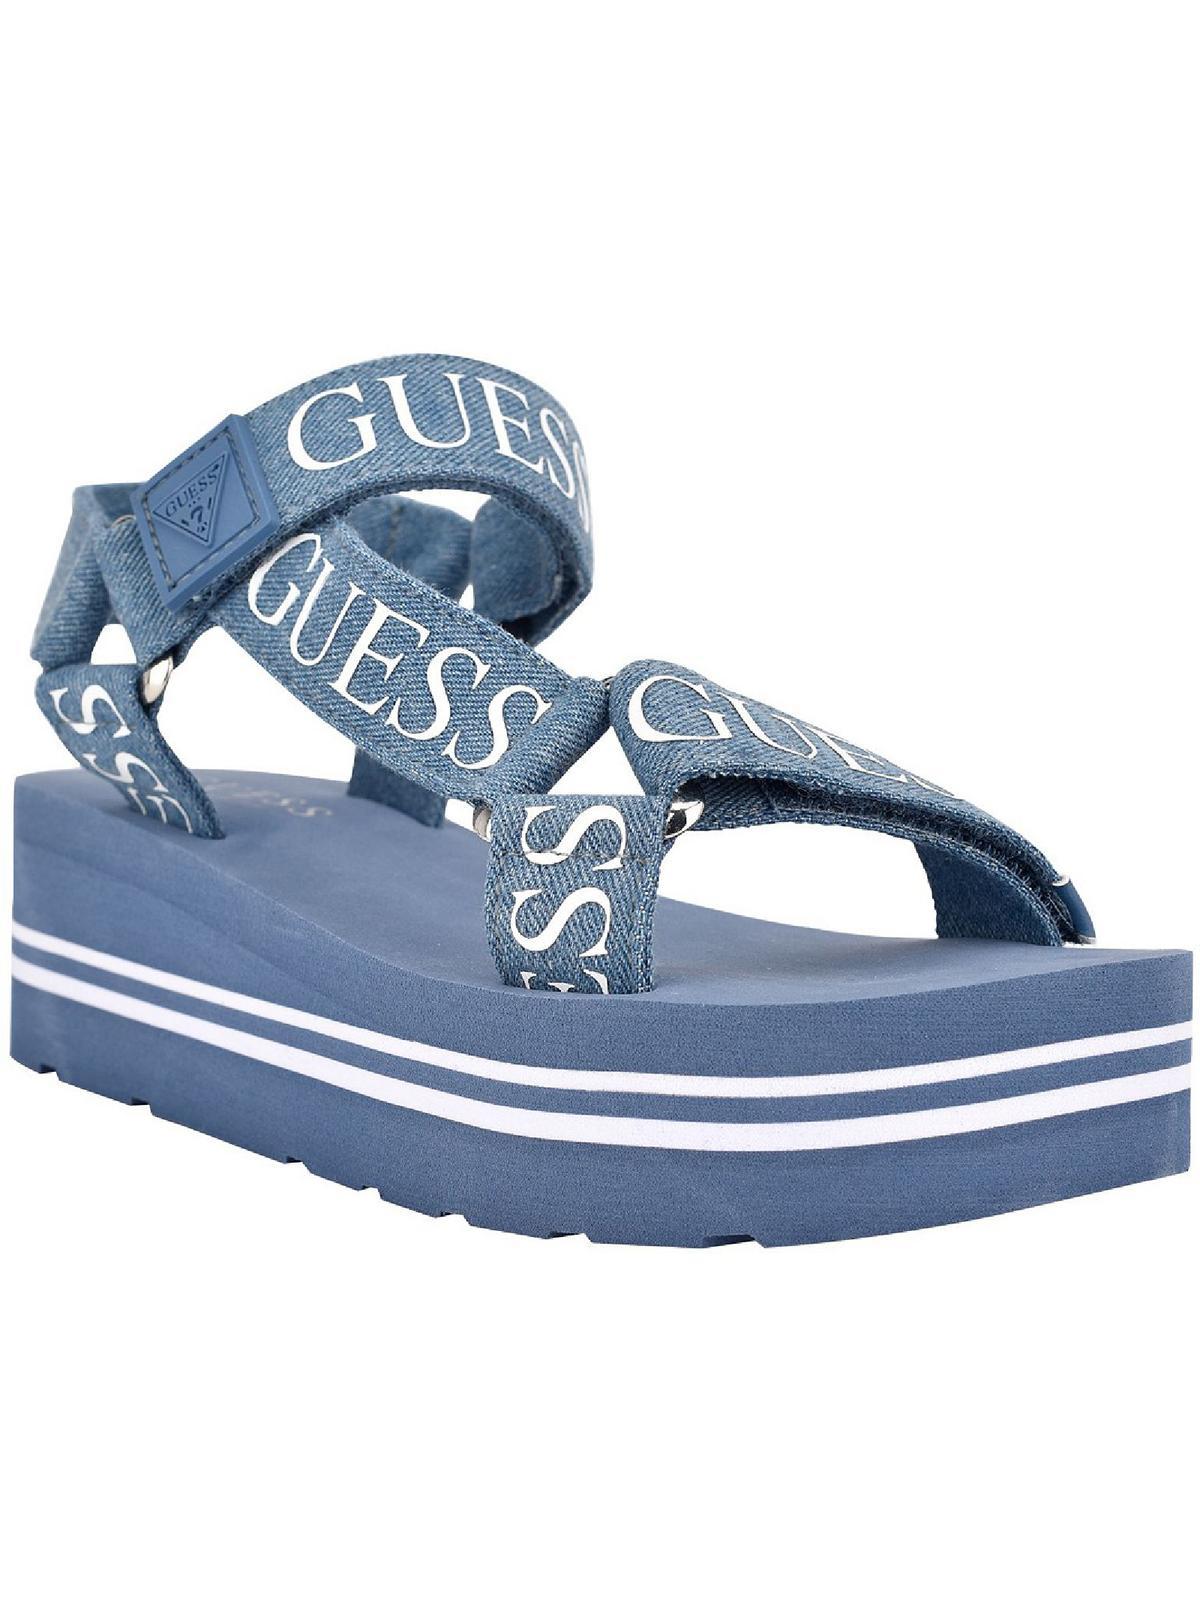 Guess Avin Denim Logo Platform Sandals in Blue | Lyst